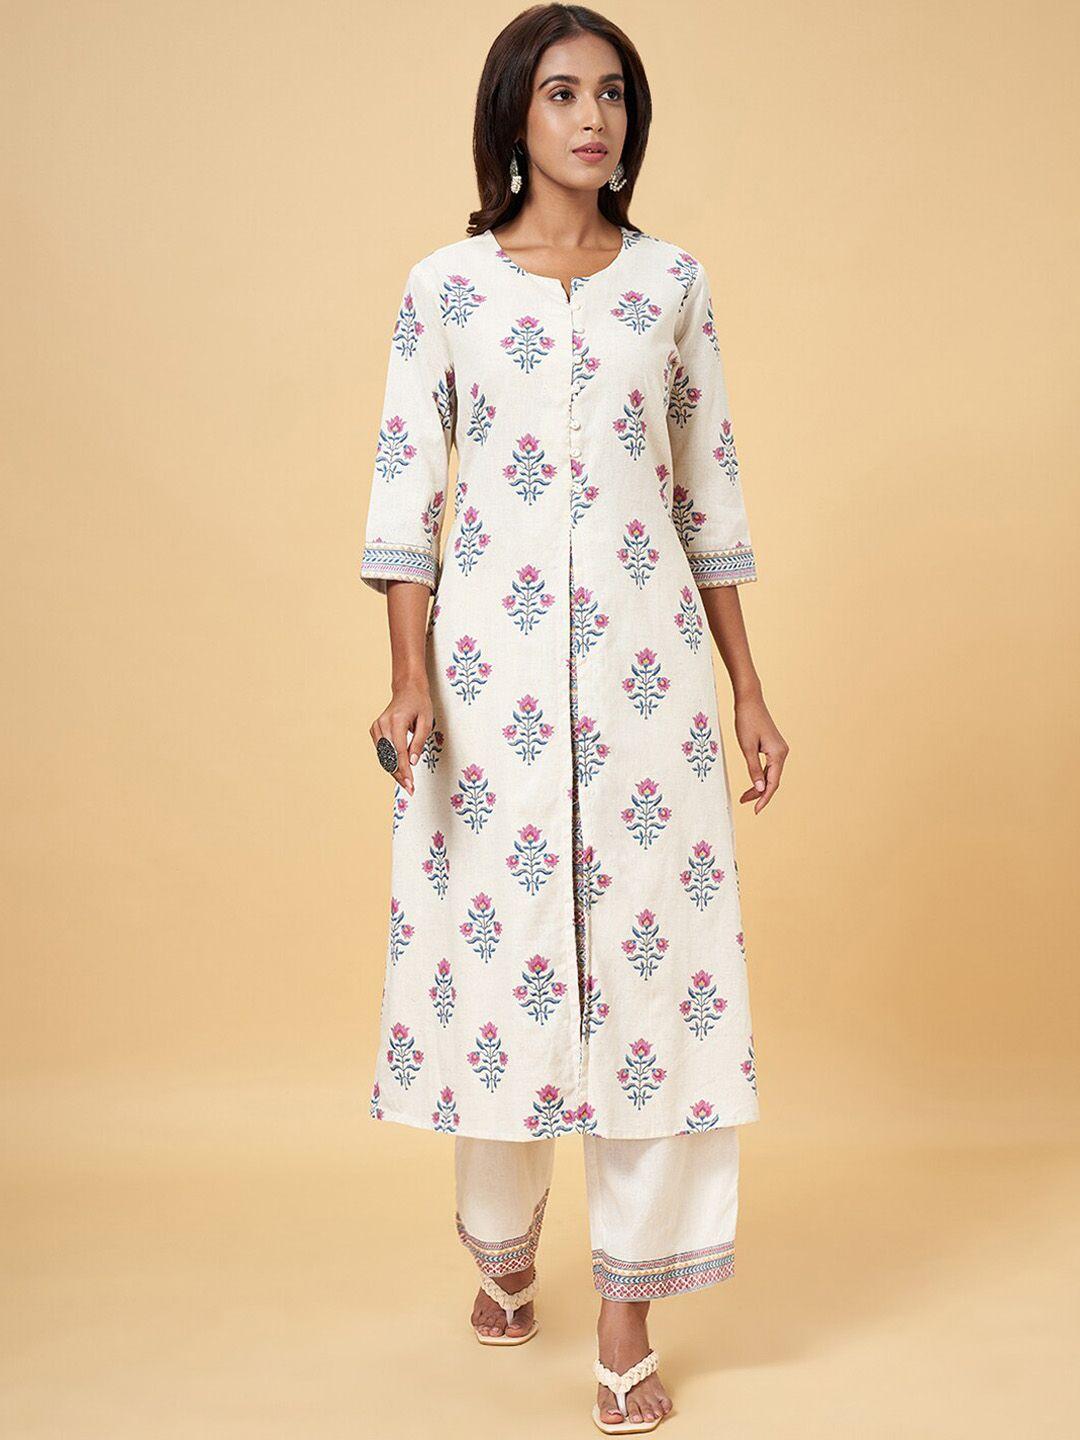 rangmanch by pantaloons floral printed pure cotton a-line kurta